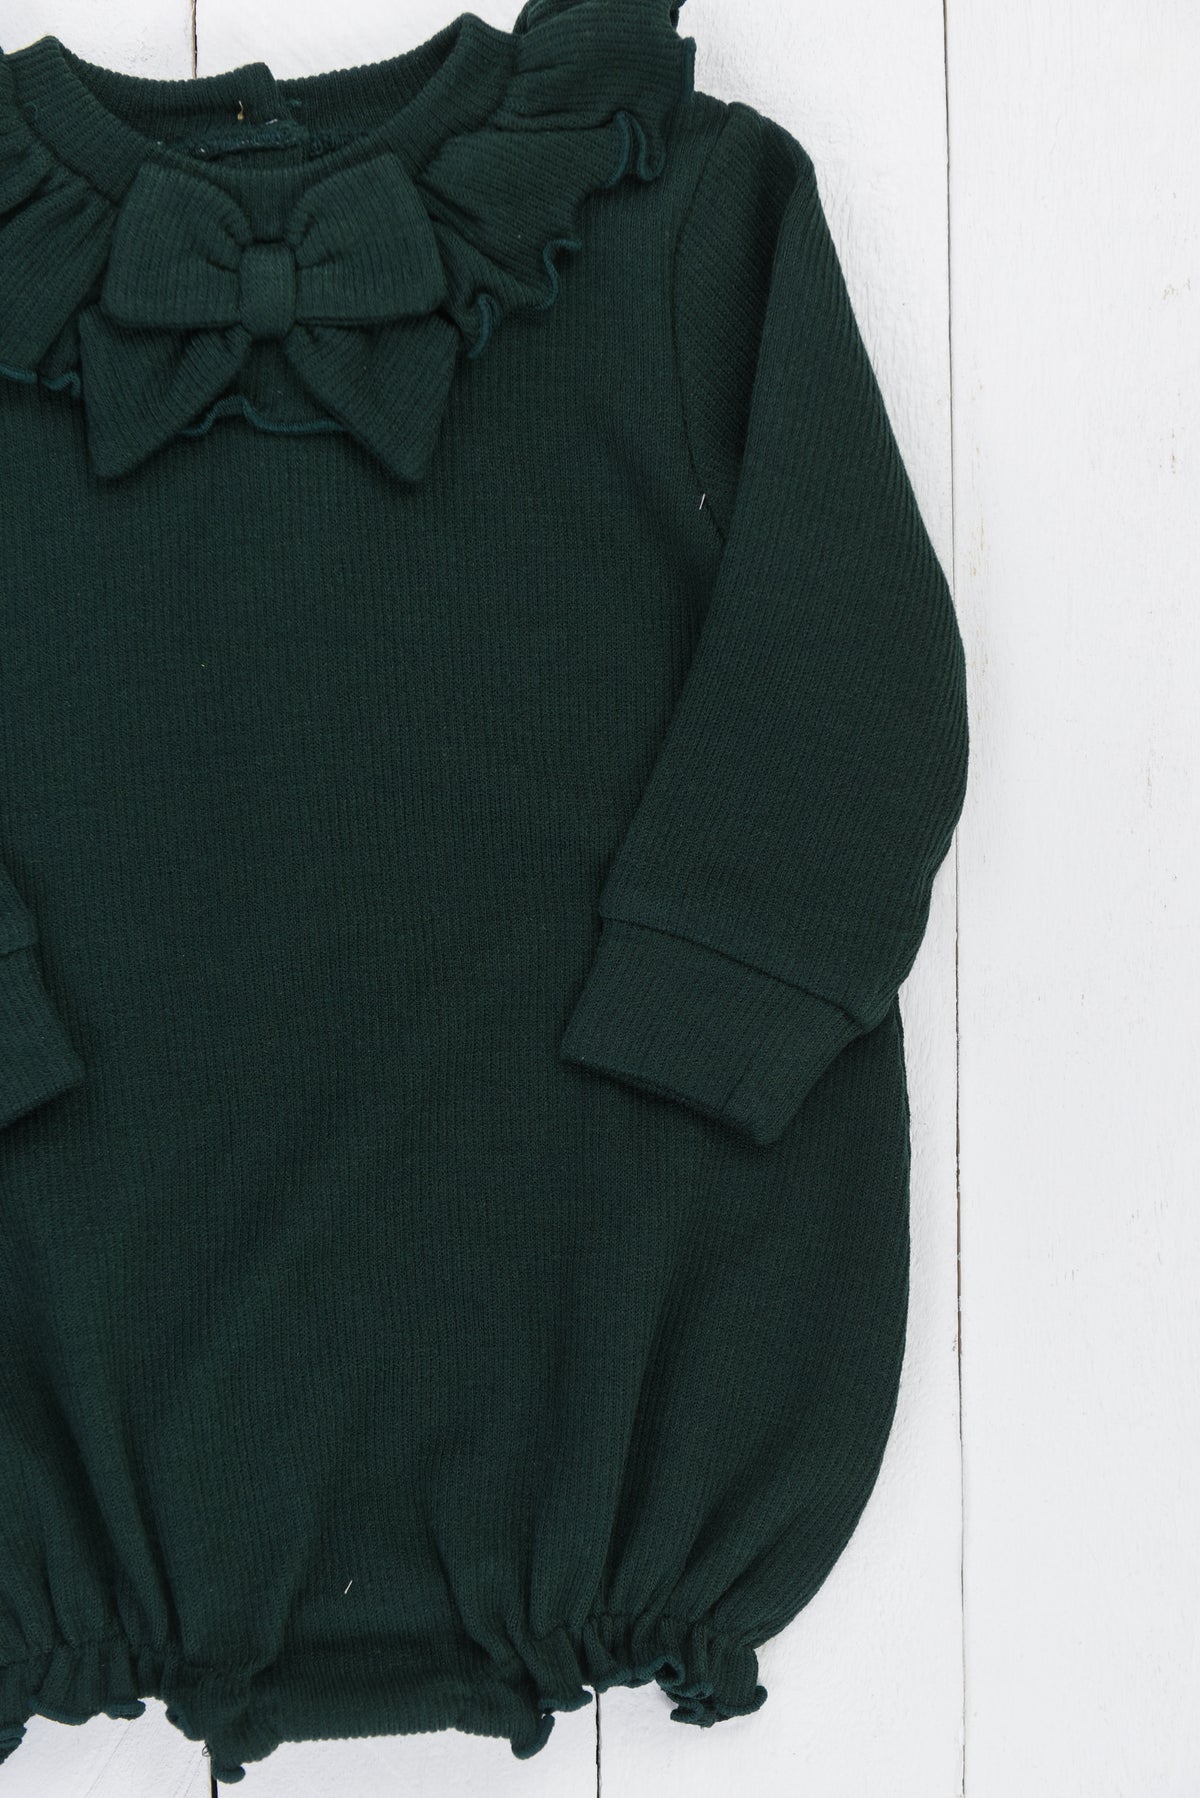 PO96: Girls Simple Green Sweater Bubble